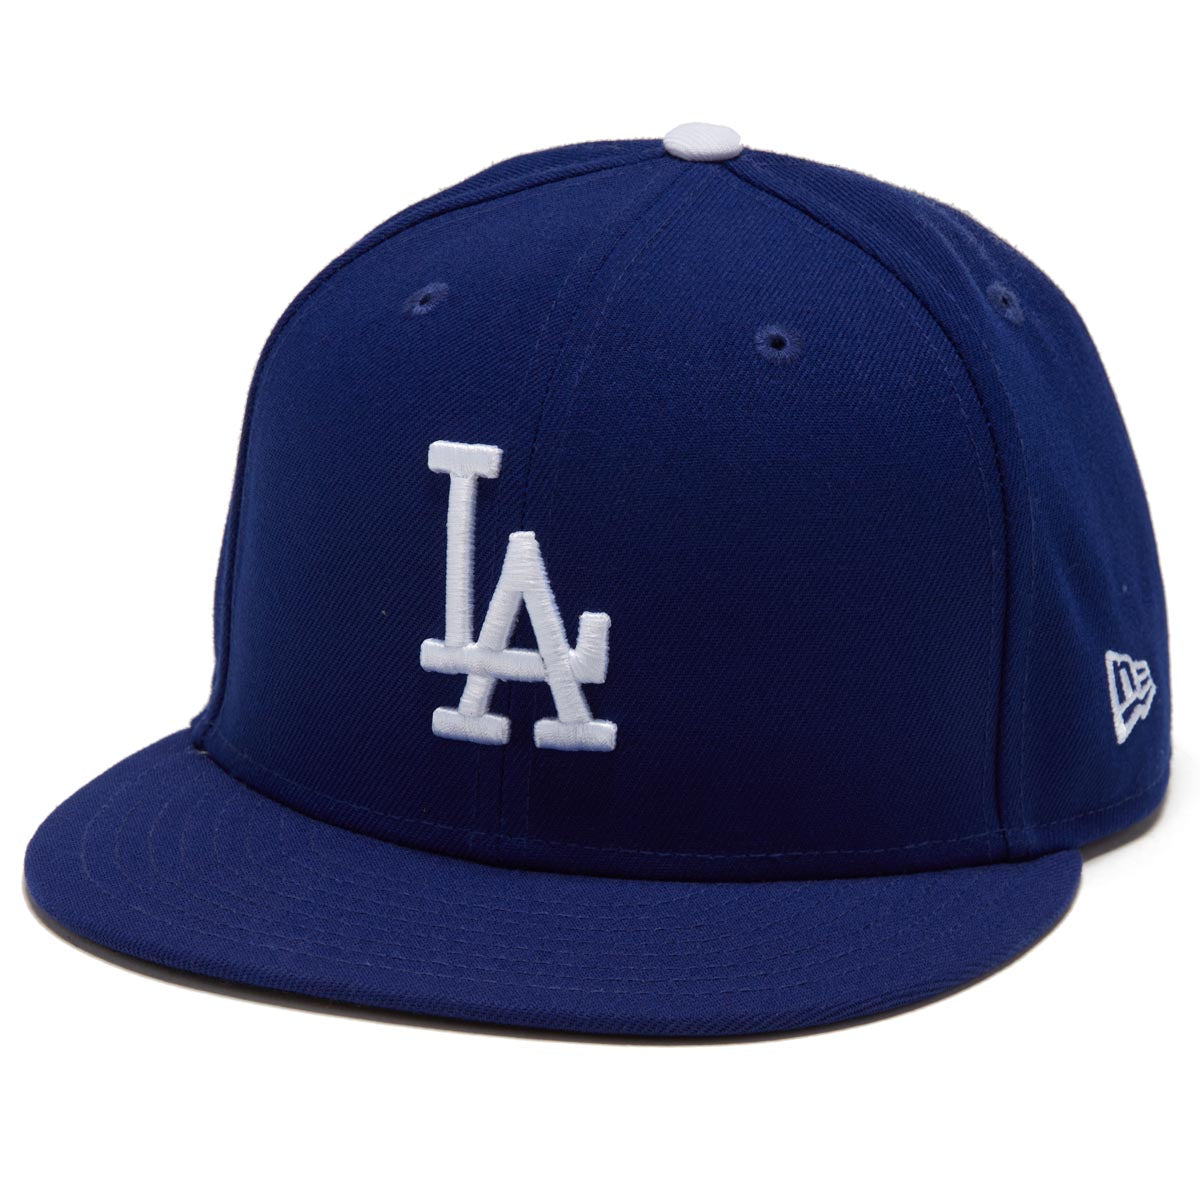 New Era x Jackie Robinson Dodgers Hat - Blue/White image 1